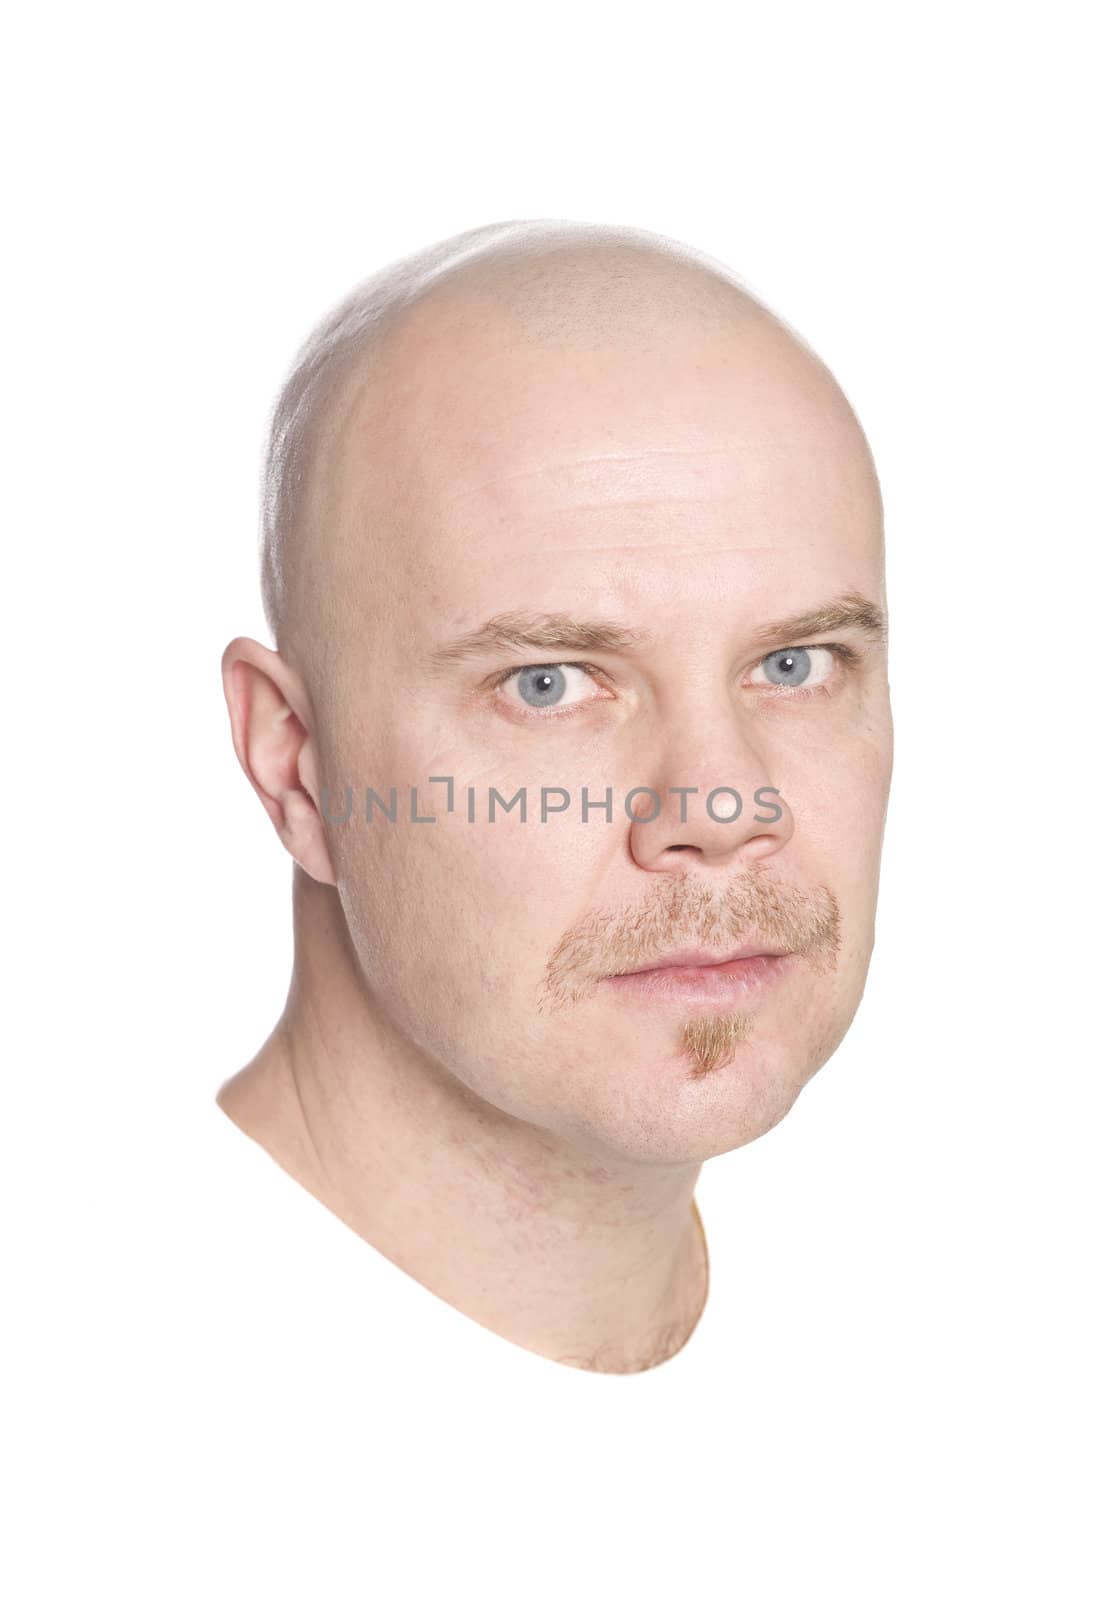 Man shaving his head by gemenacom